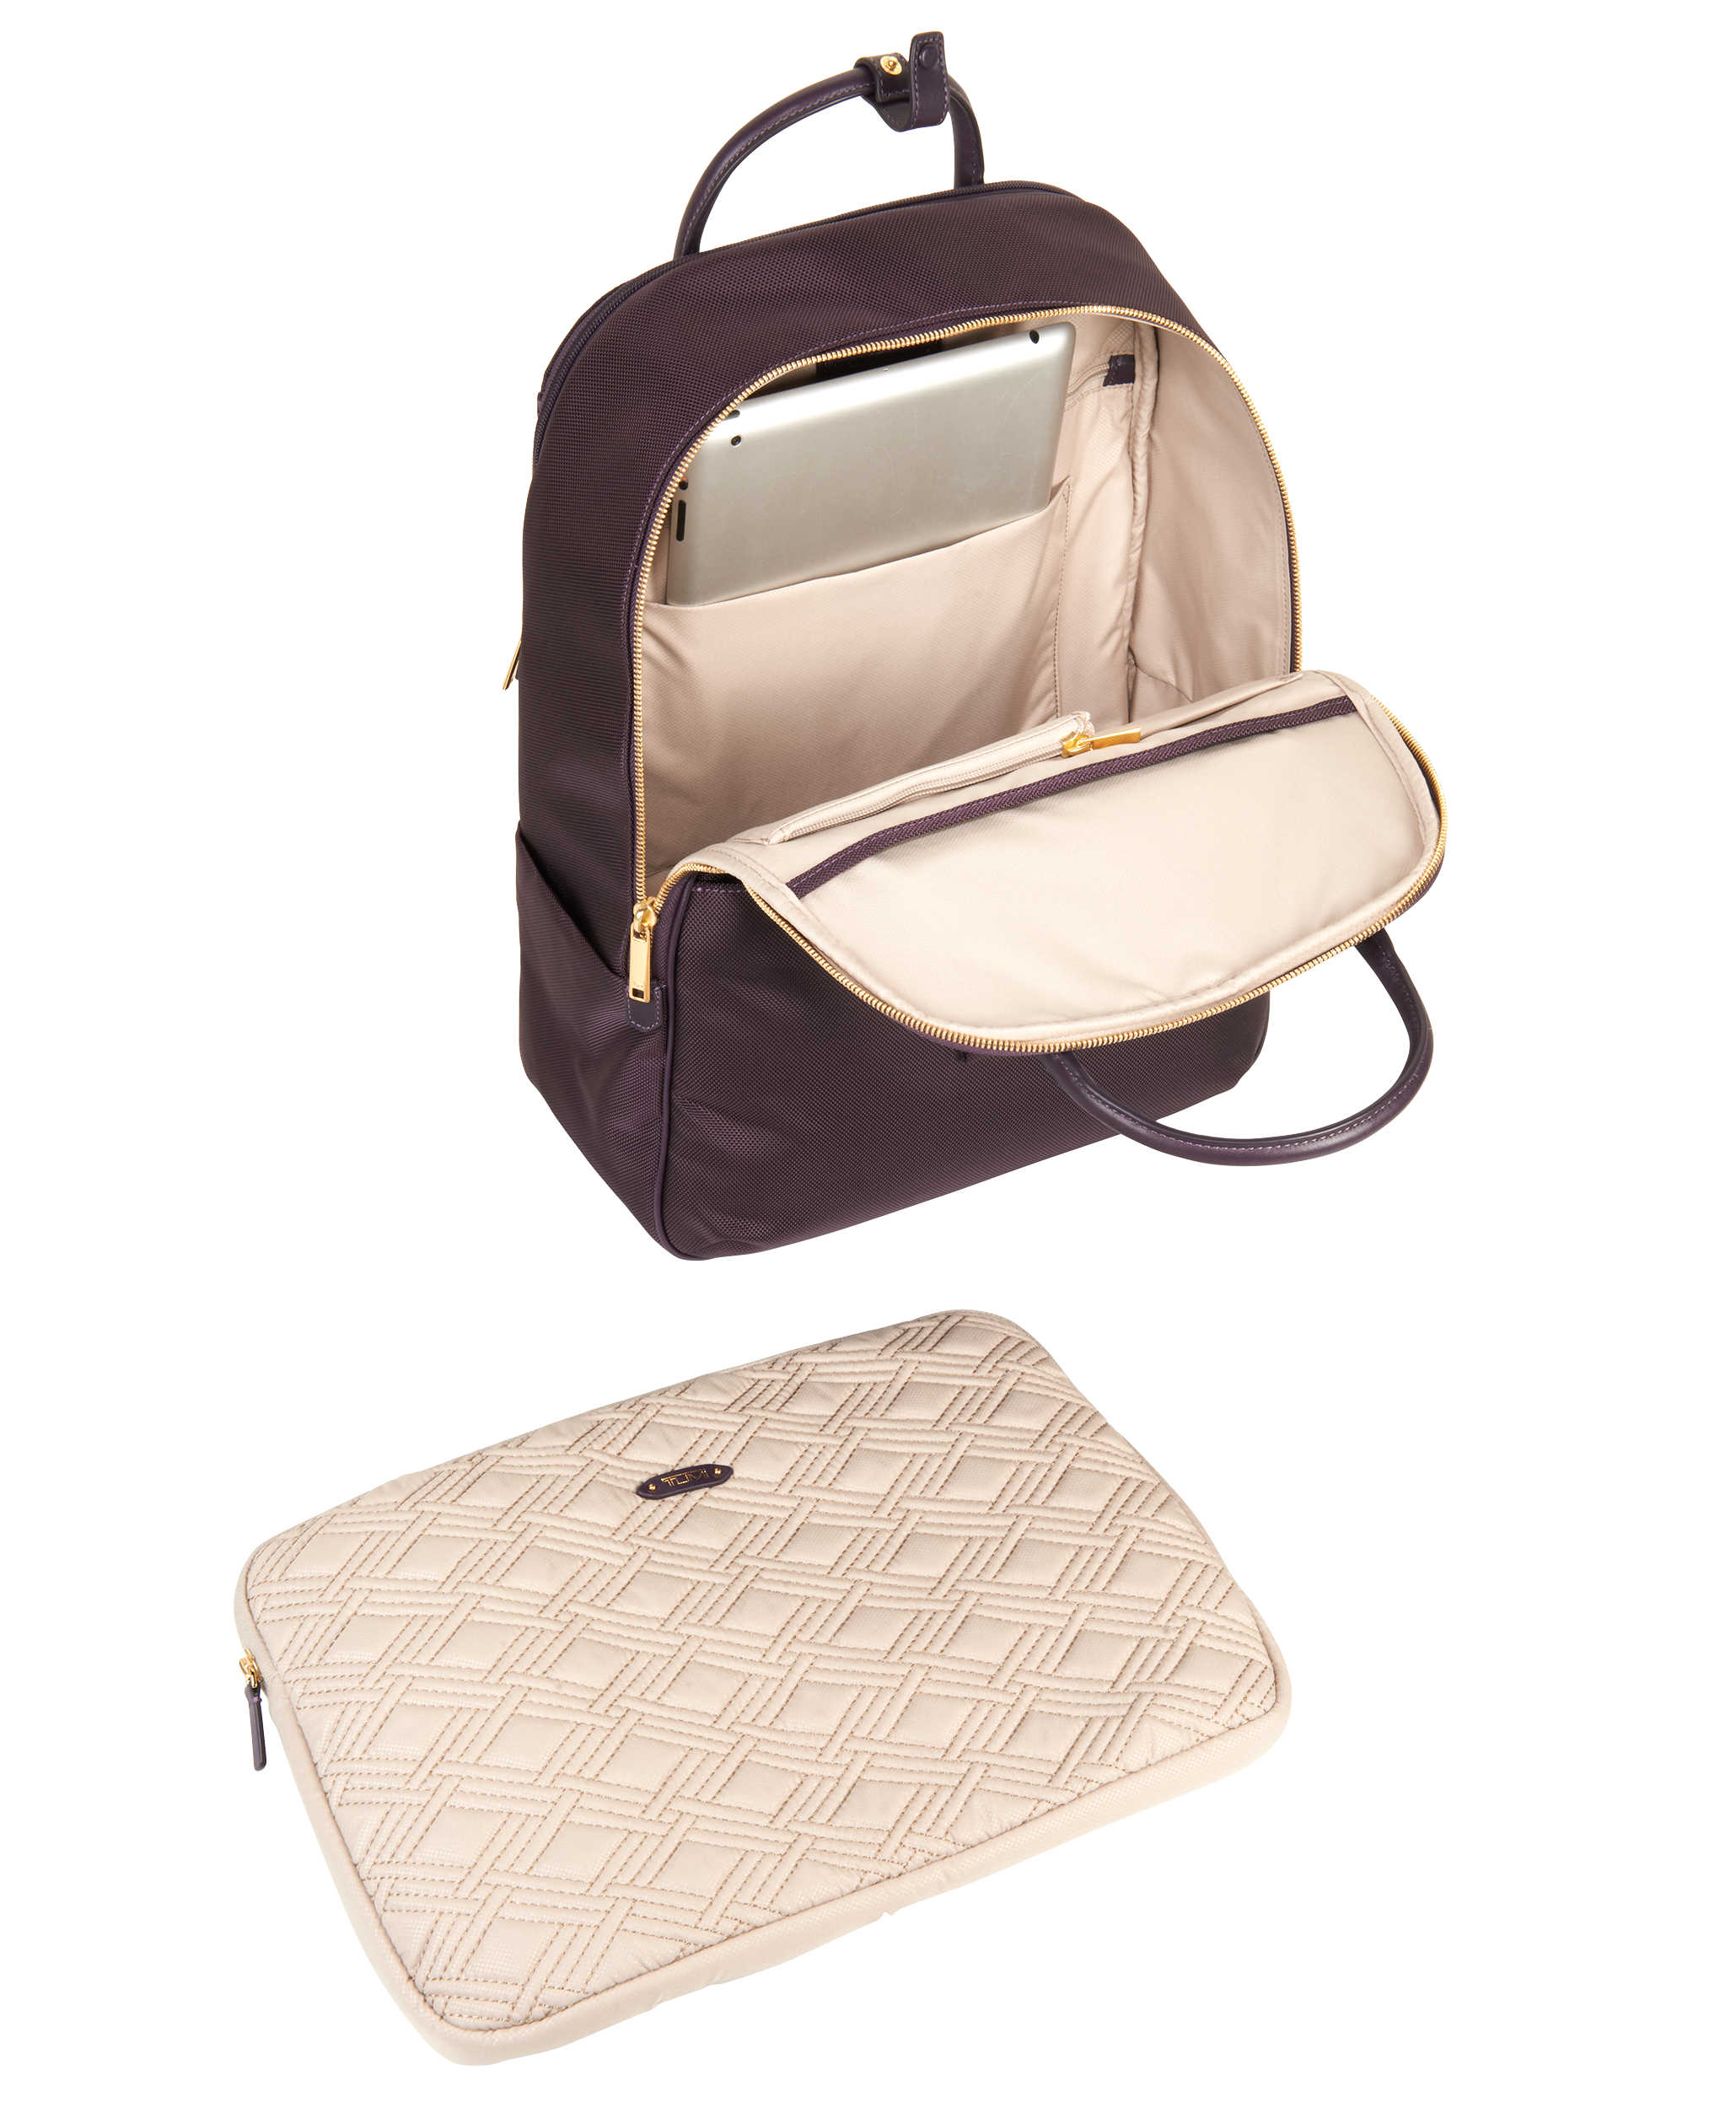 TUMI Larkin Portola Convertible Backpack Aubergine – Luggage Online